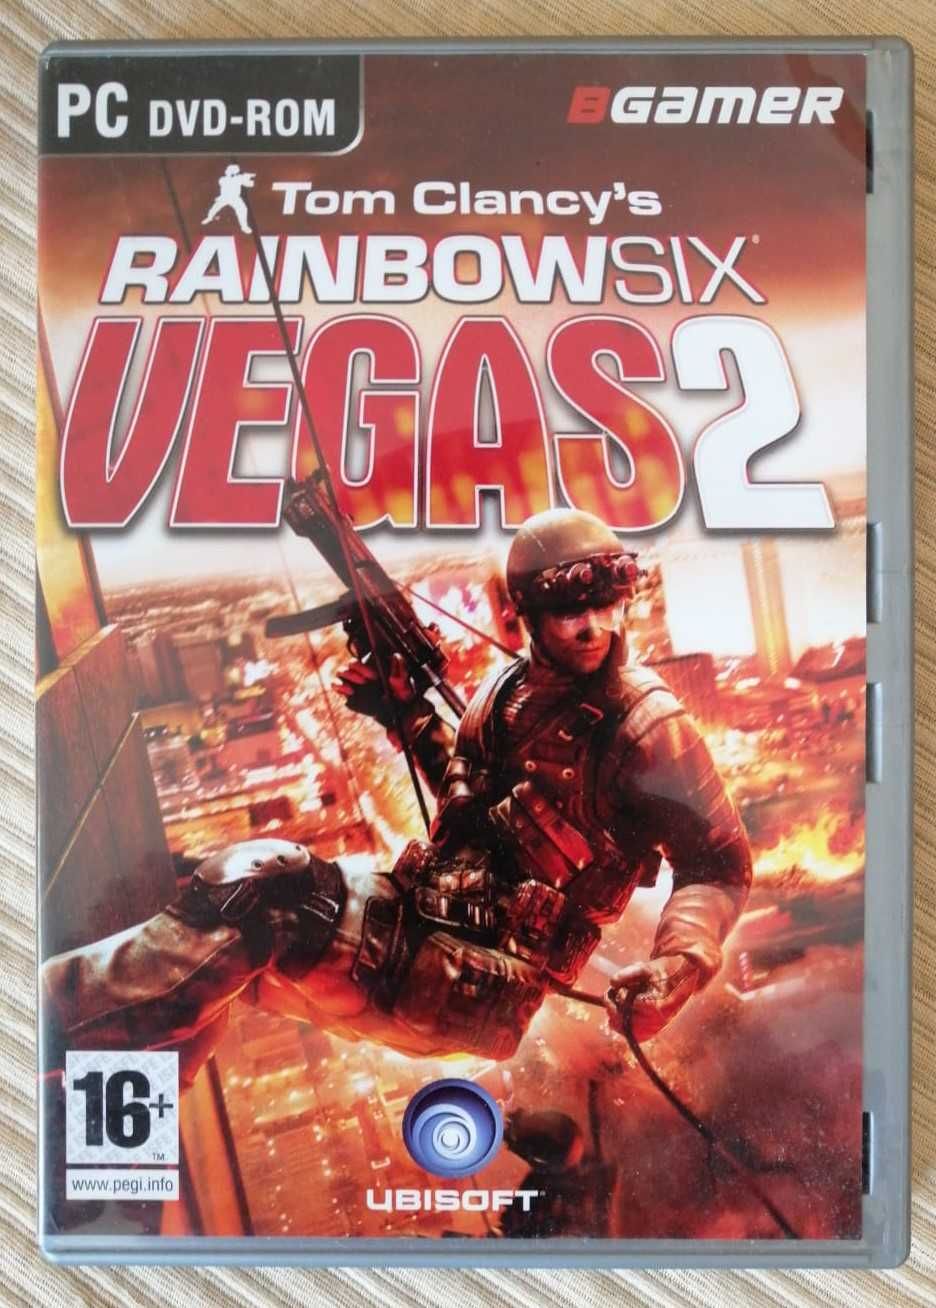 Rainbowsix Vegas 2